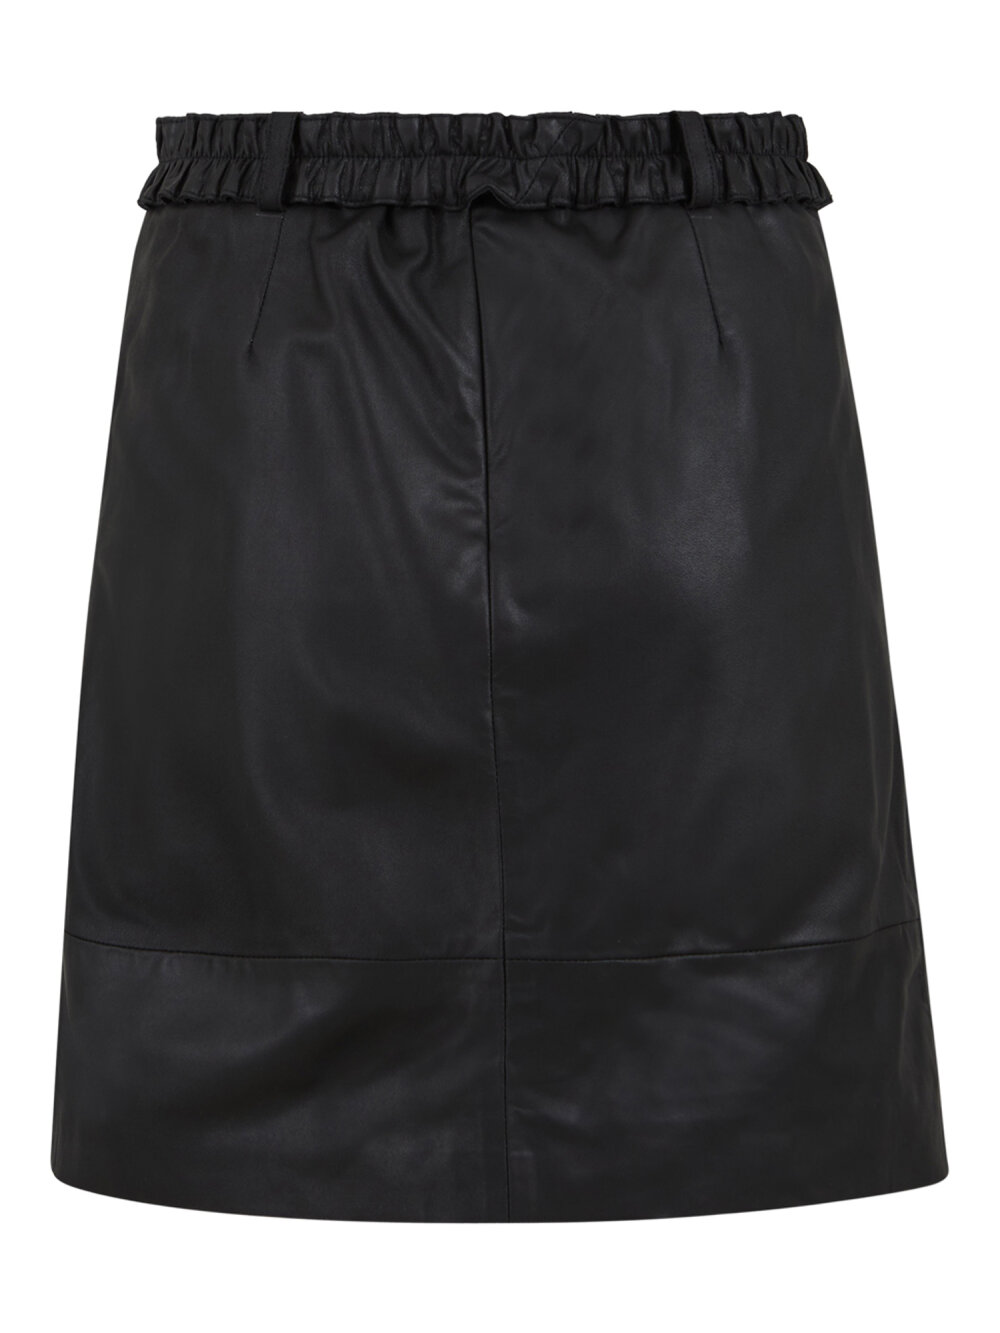 Coster Copenhagen - Leather skirt with belt